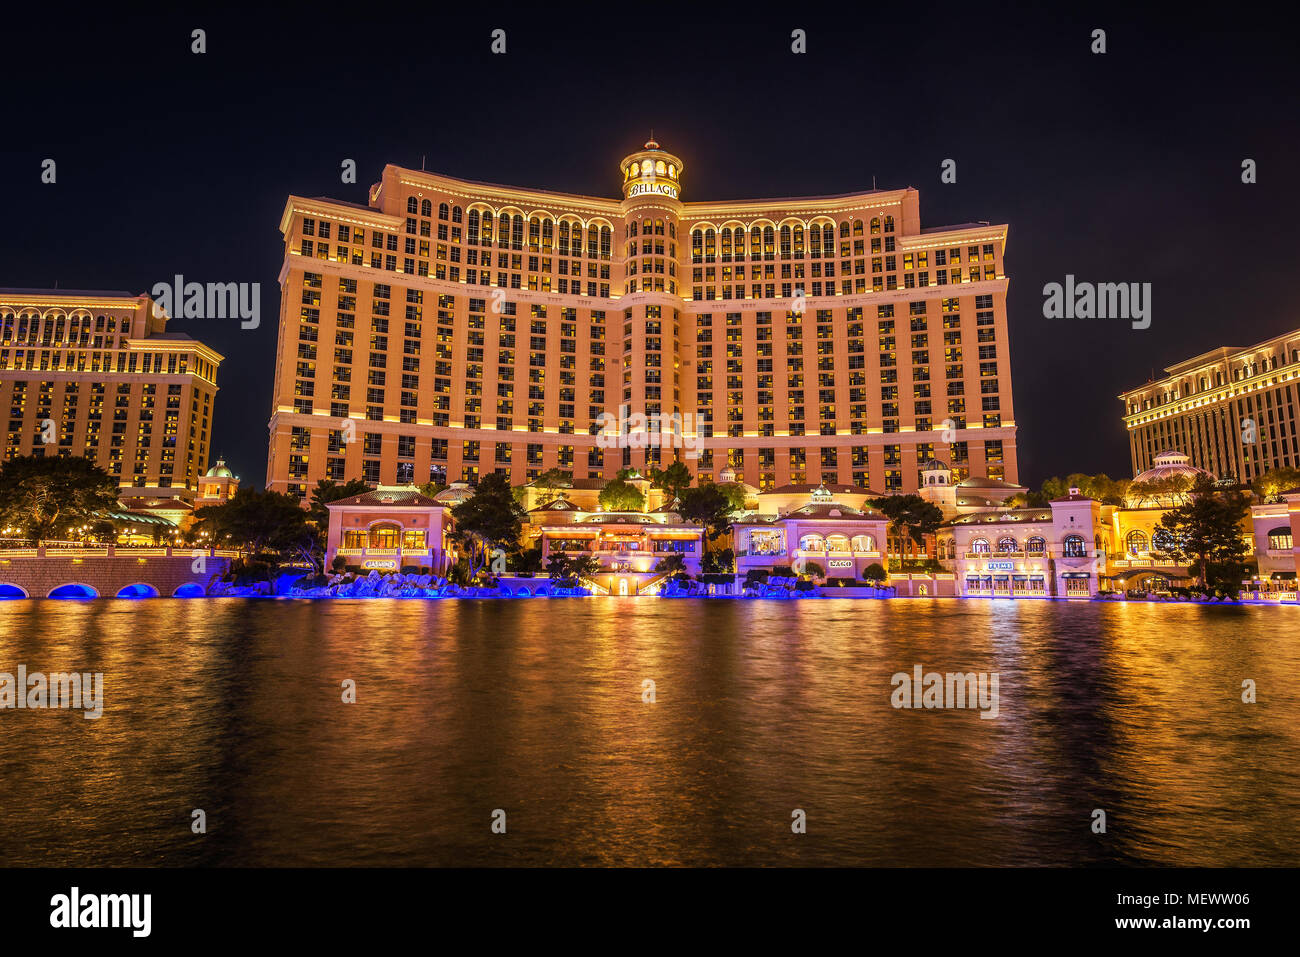 Bellagio hotel and casino at night Stock Photo